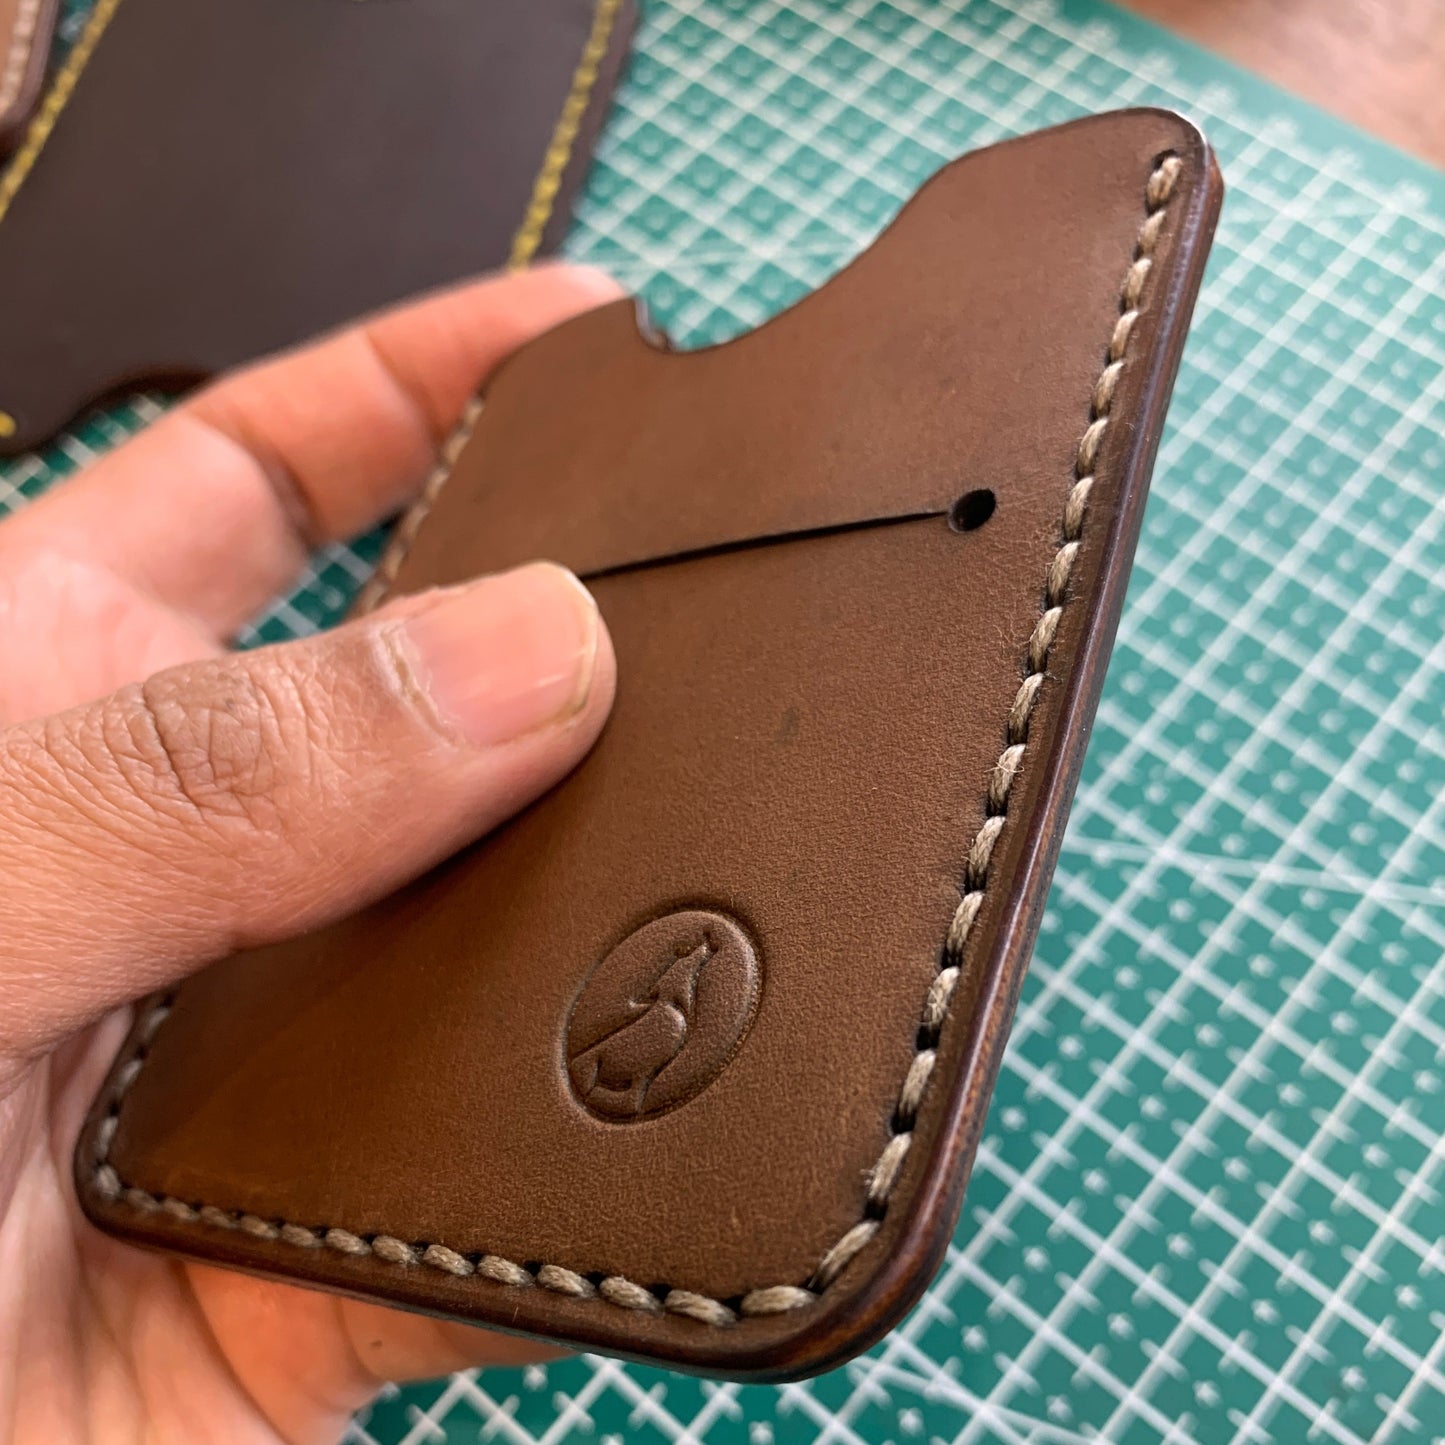 The Verve Pro: A Leather Cardholder